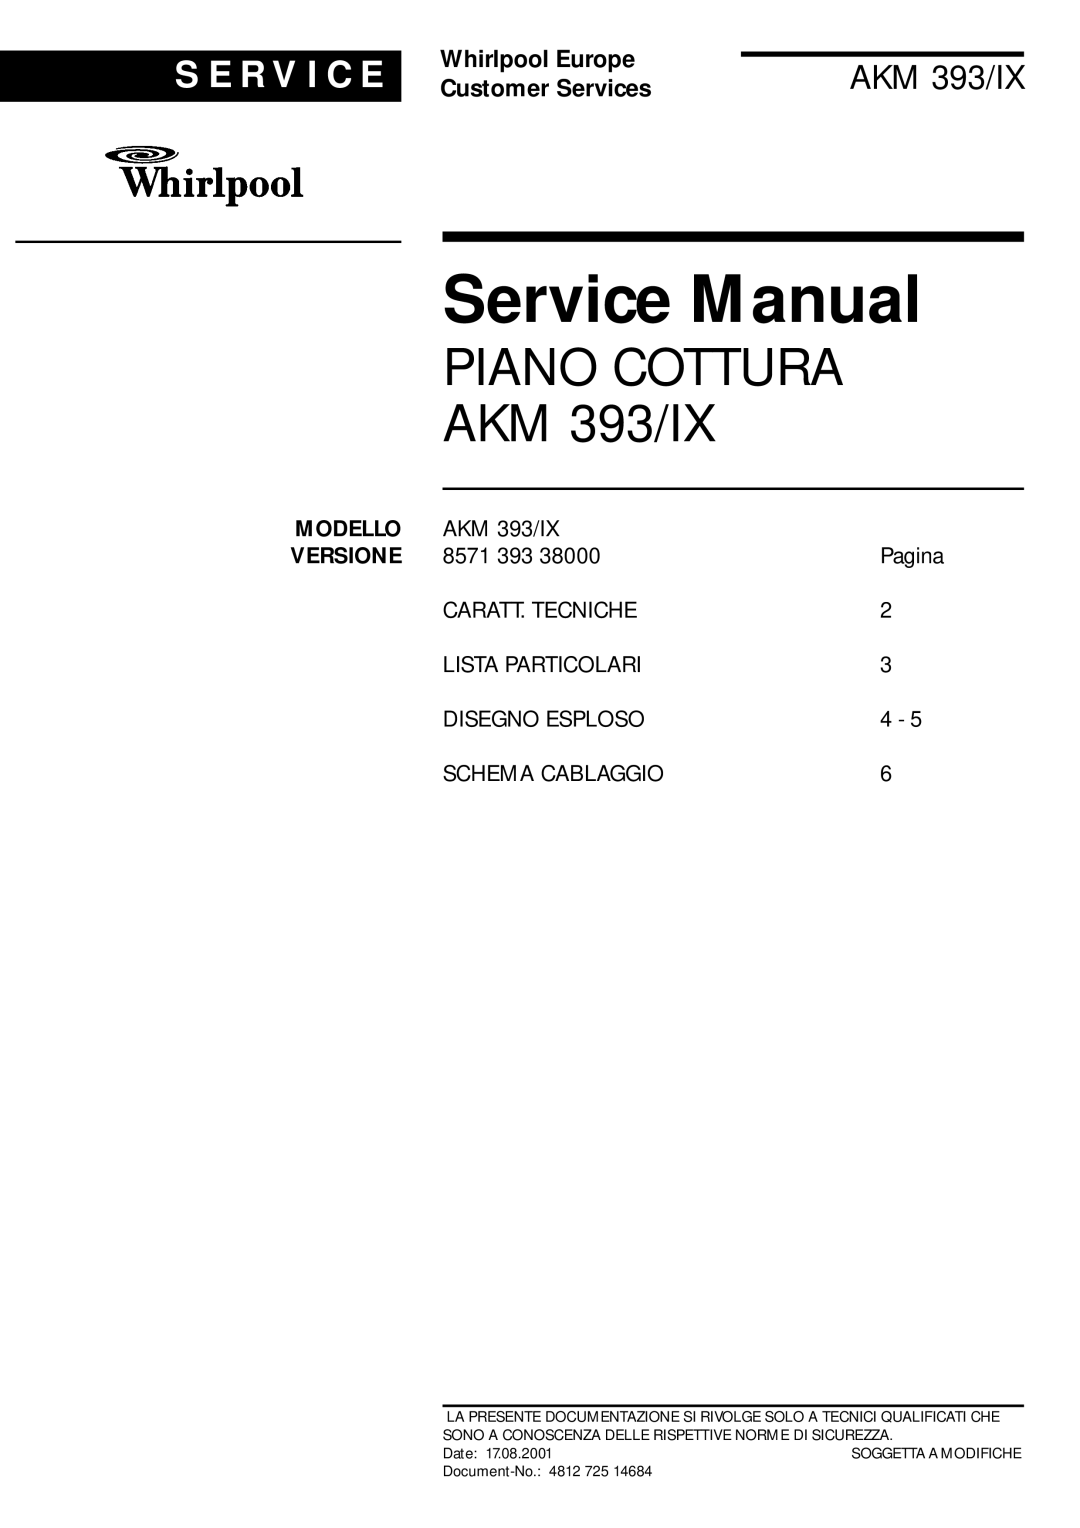 Whirlpool AKM 393 IX service manual Modello, Service Manual, PIANO COTTURA AKM 393/IX, S E R V I C E, Whirlpool Europe 